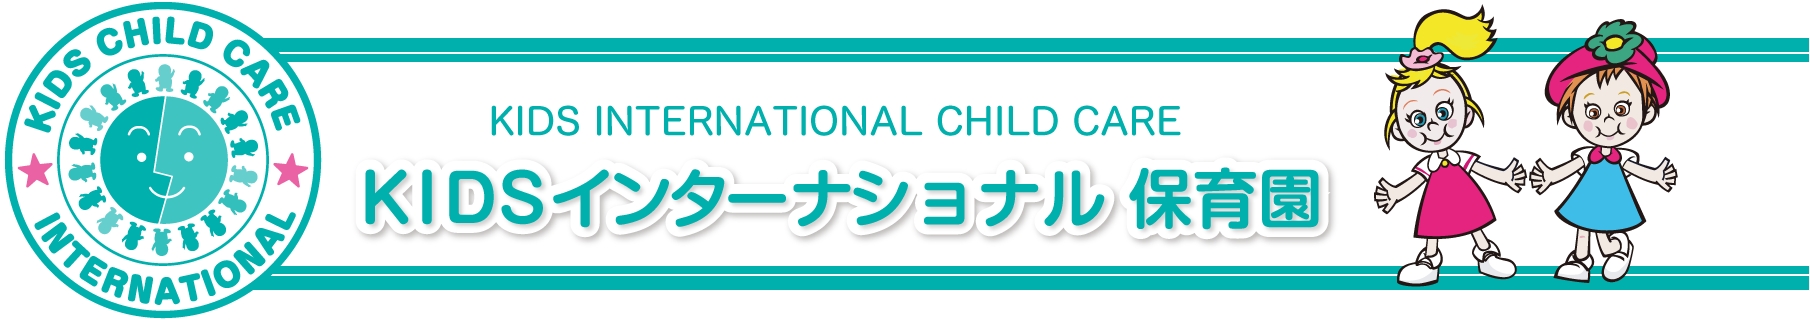 KIDS INTERNATIONAL CHILD CARE KIDSインターナショナル保育園